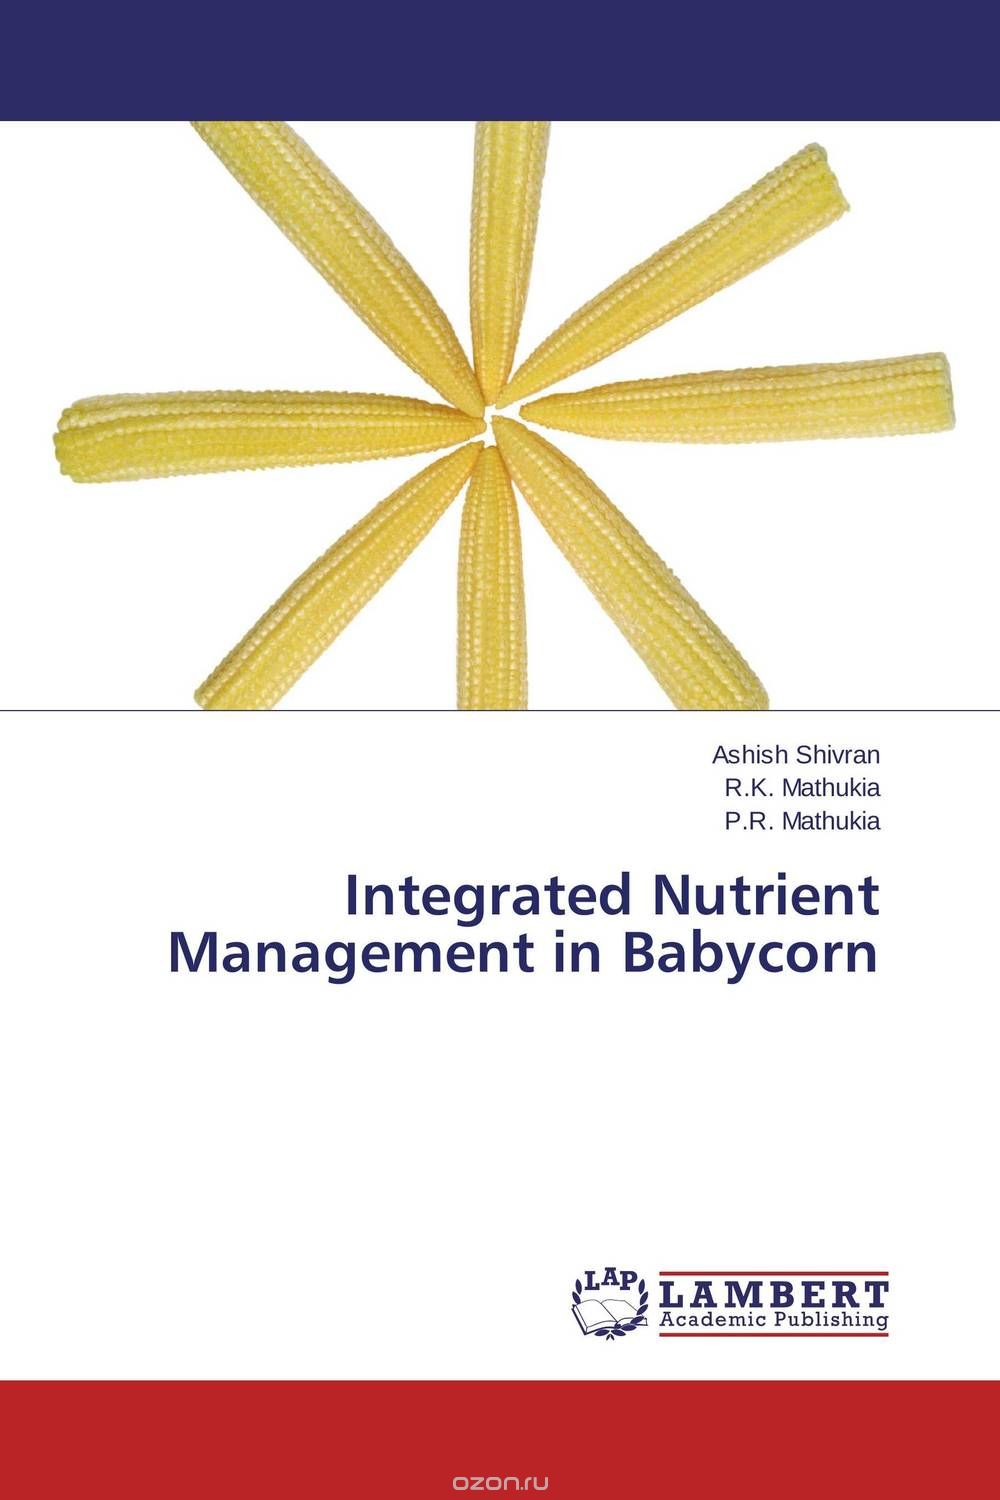 Скачать книгу "Integrated Nutrient Management in Babycorn"